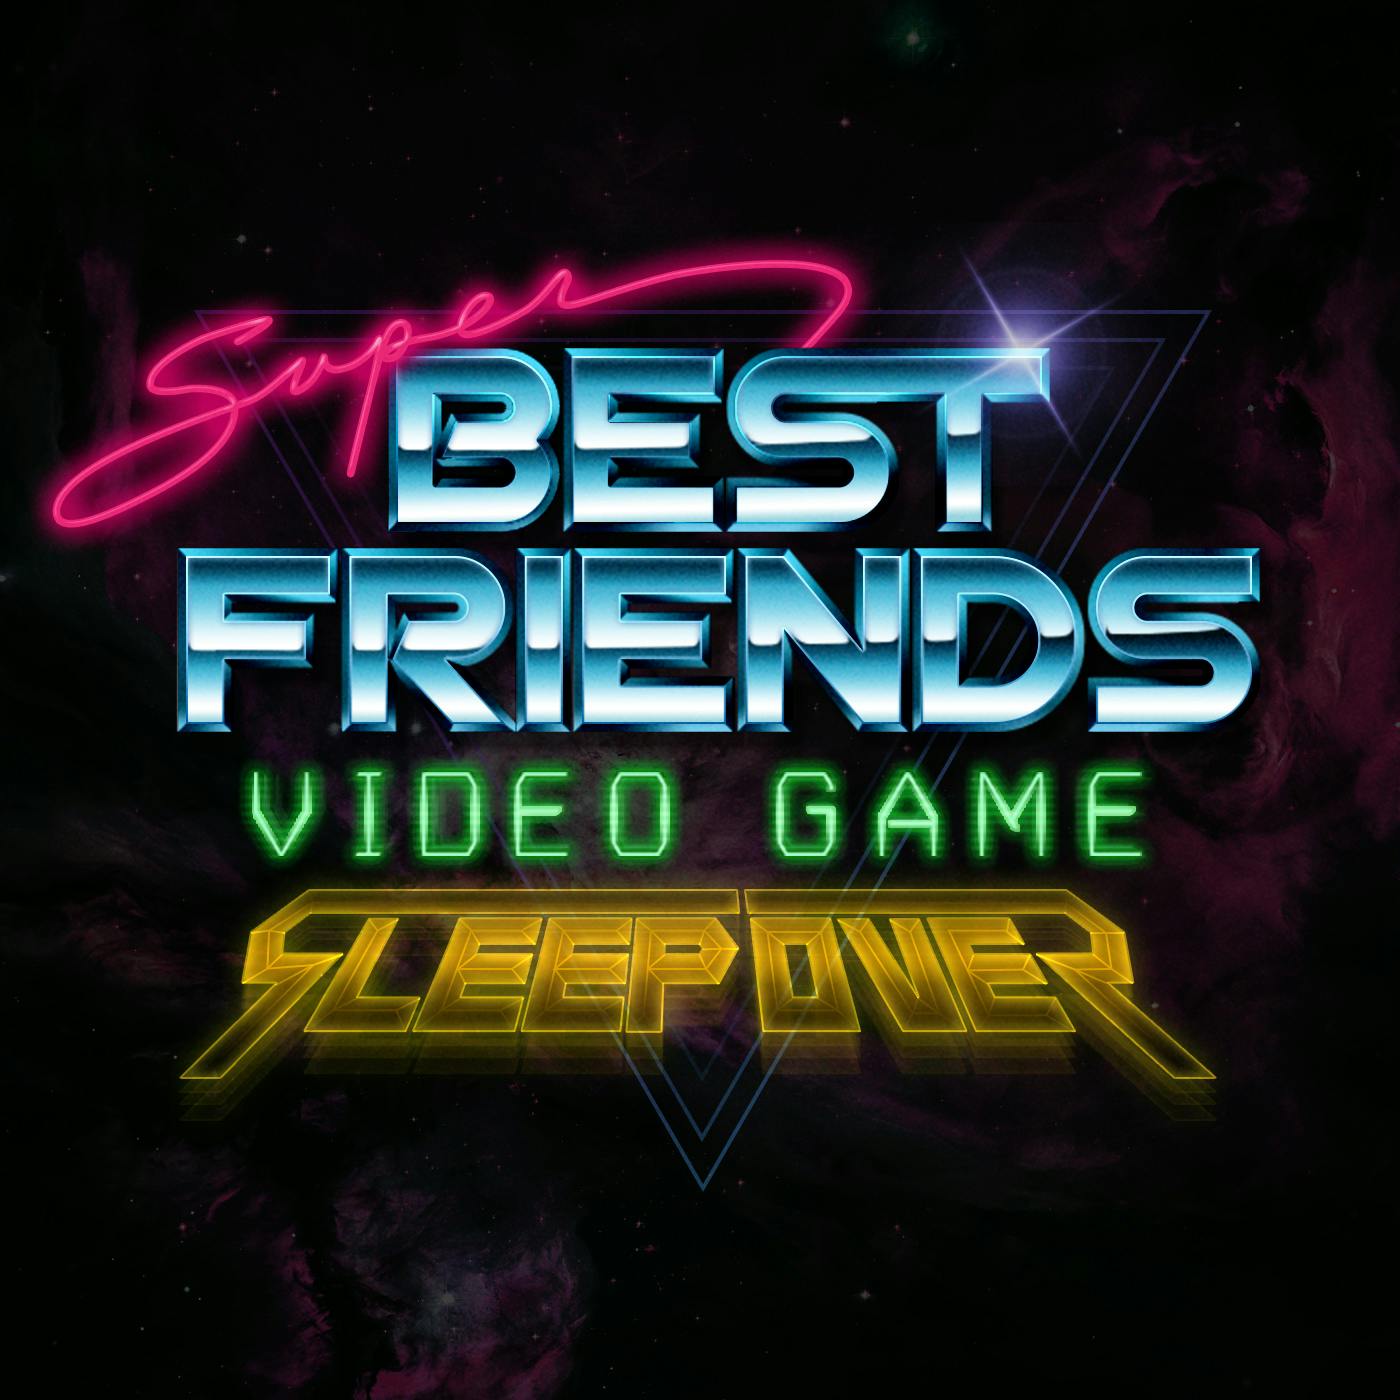 Super Best Friends Video Game Sleepover - Episode 46!